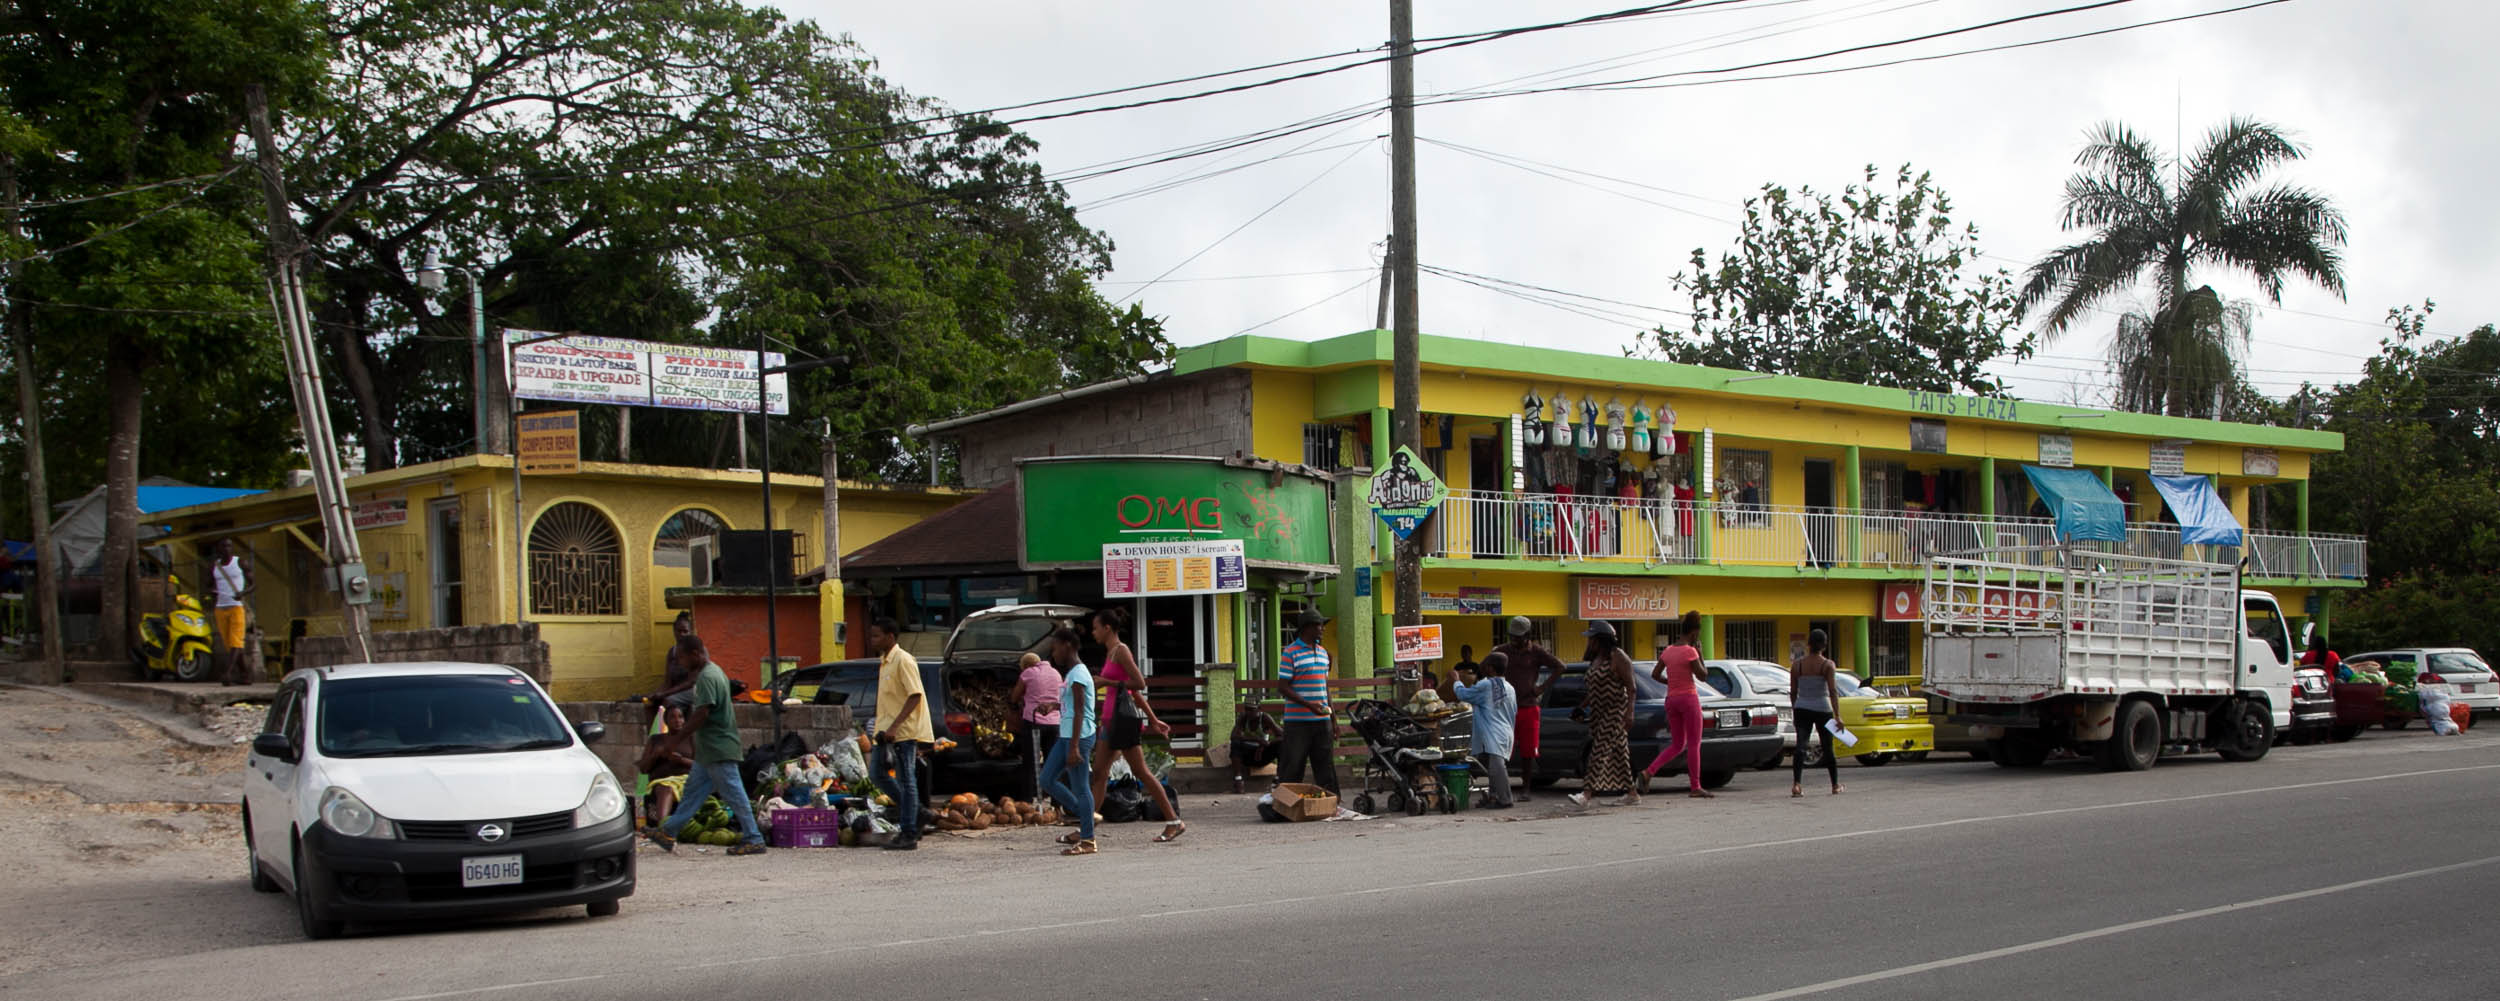 Taits Plaza - Negril Center Shopping - Negril Jamaica